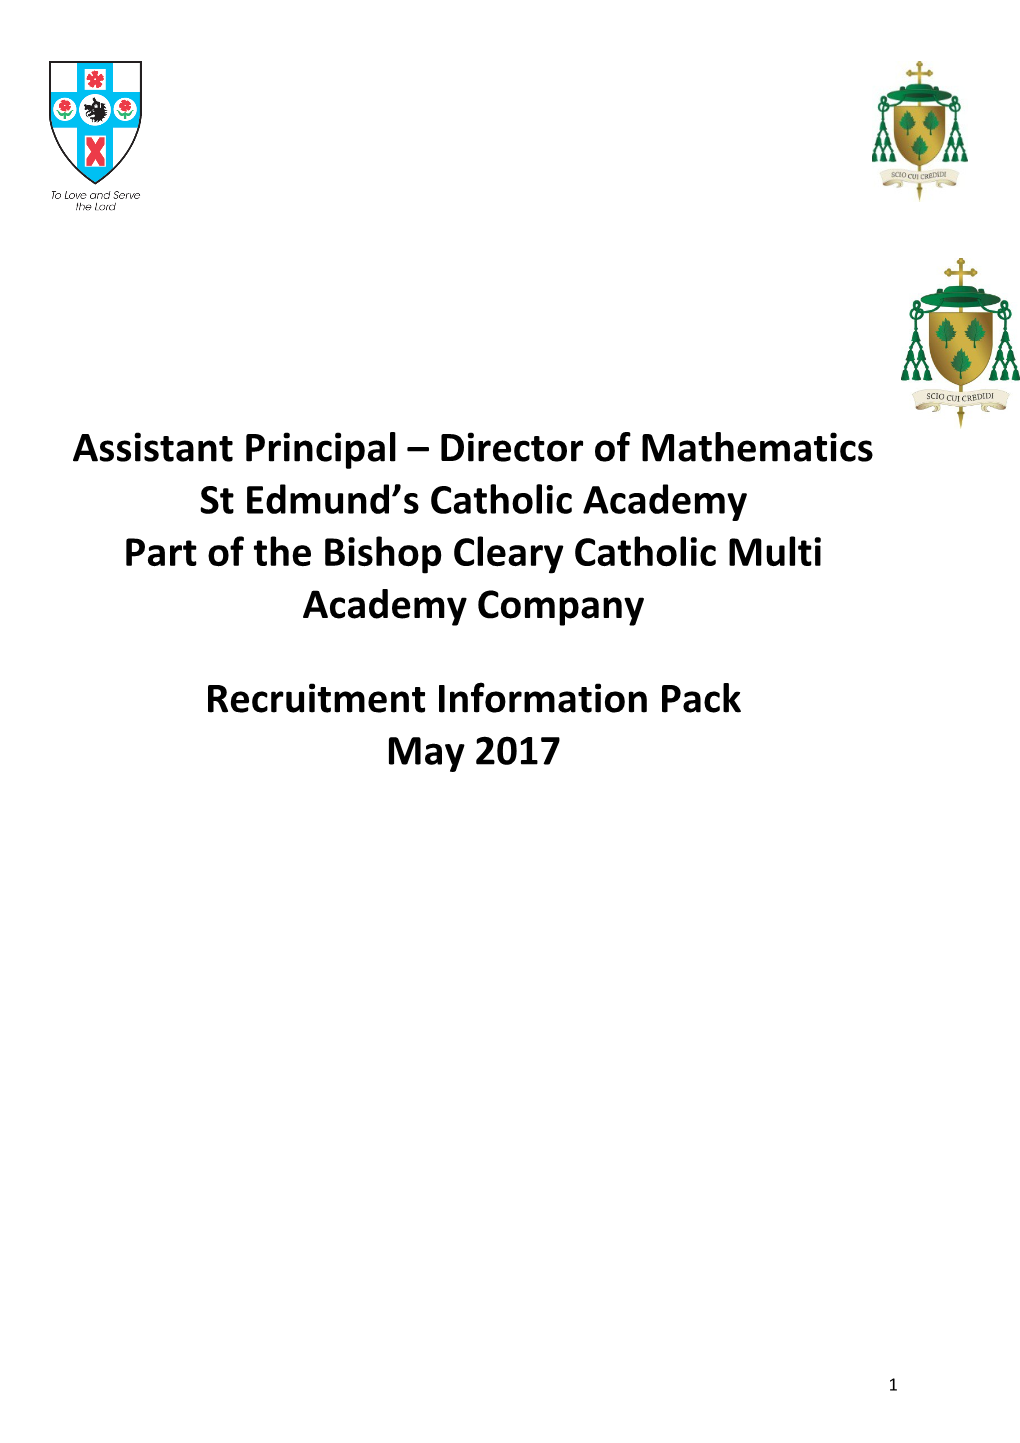 Assistant Principal Director of Mathematics